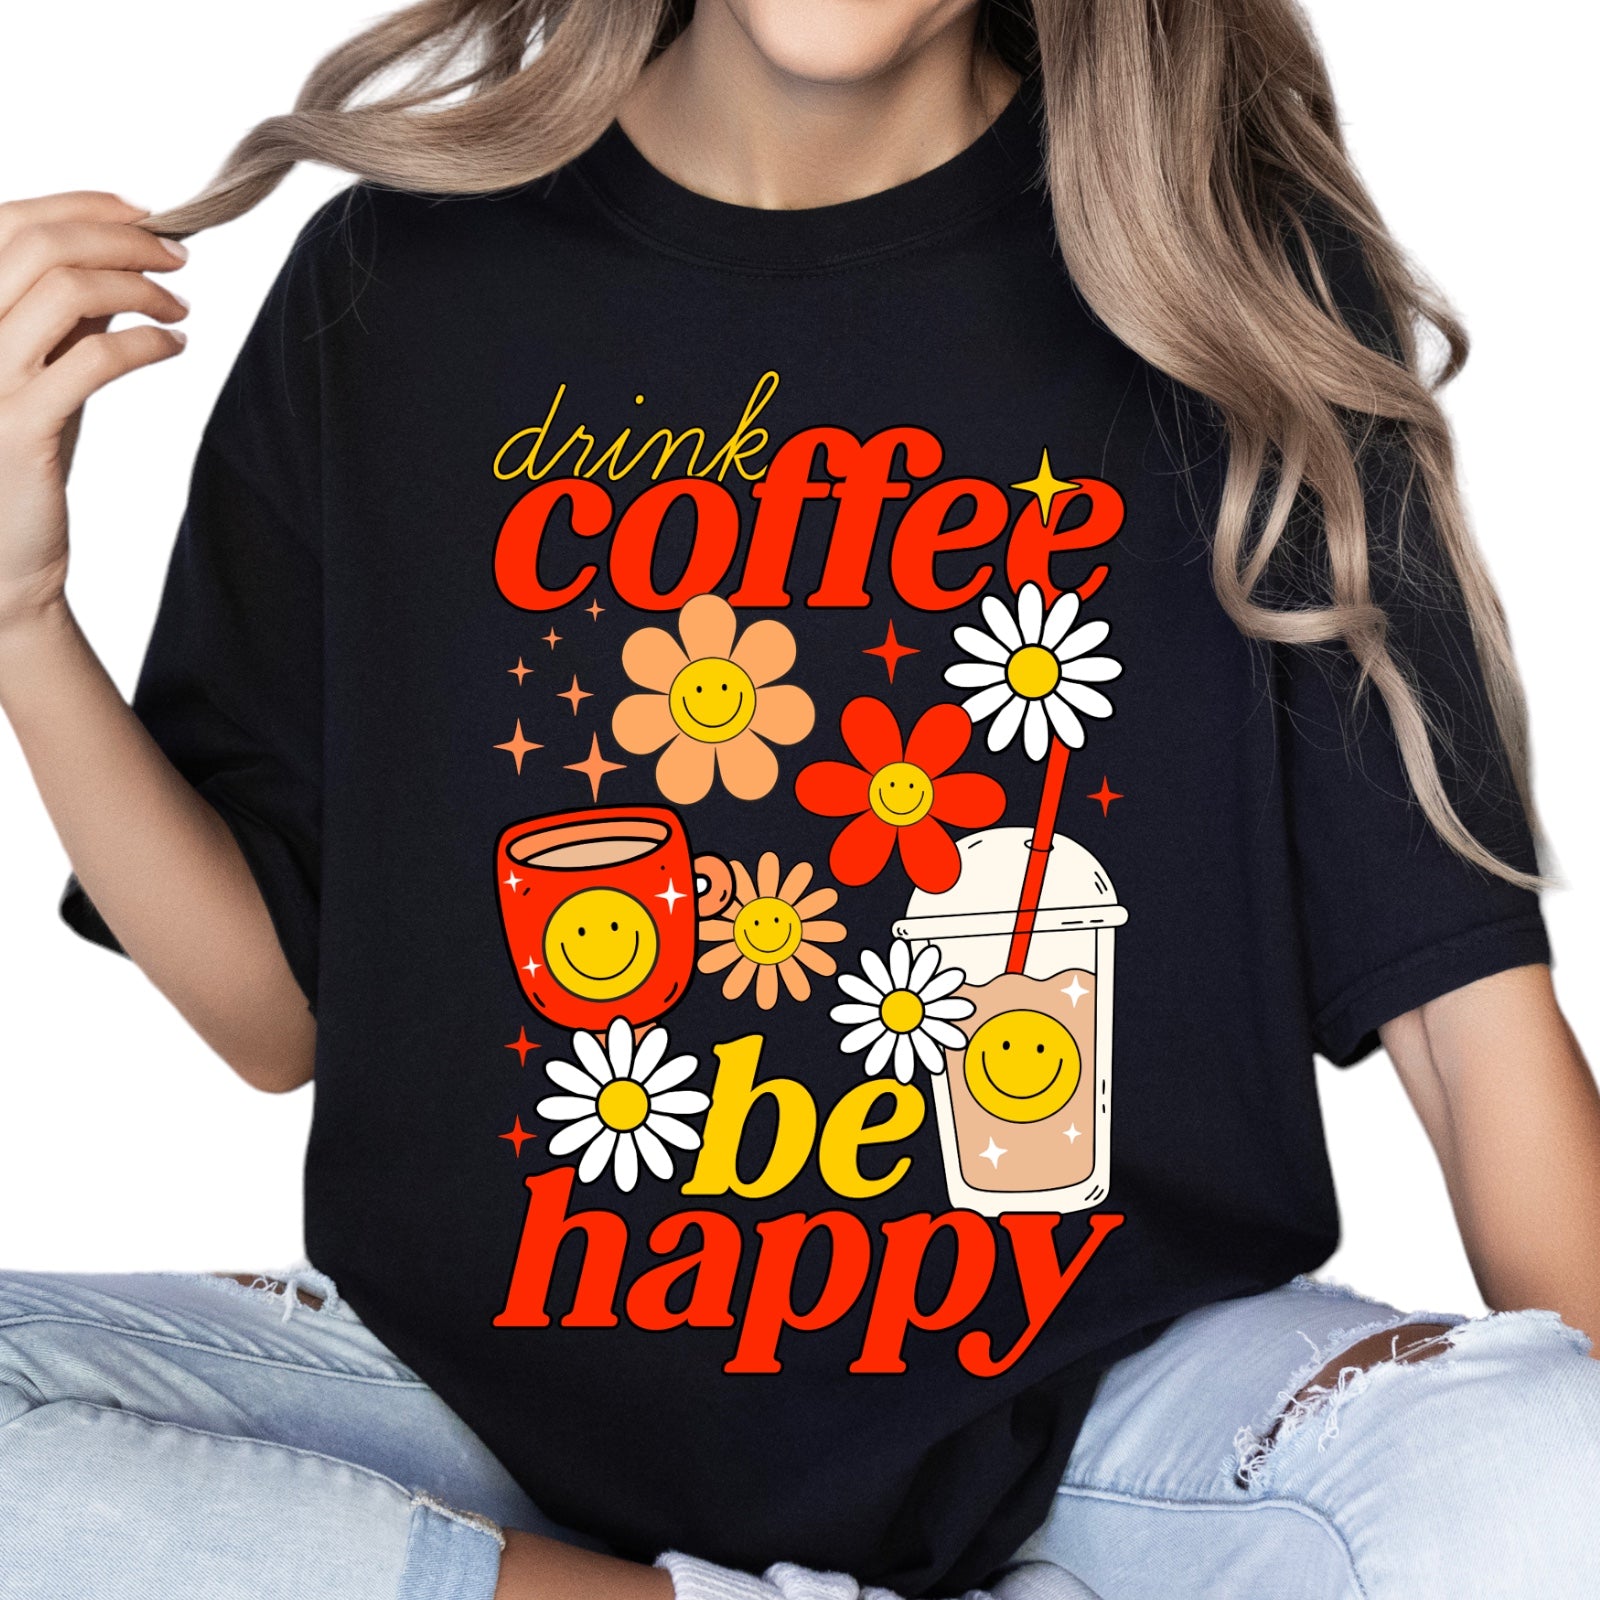 Drink Coffee Be Happy Tee